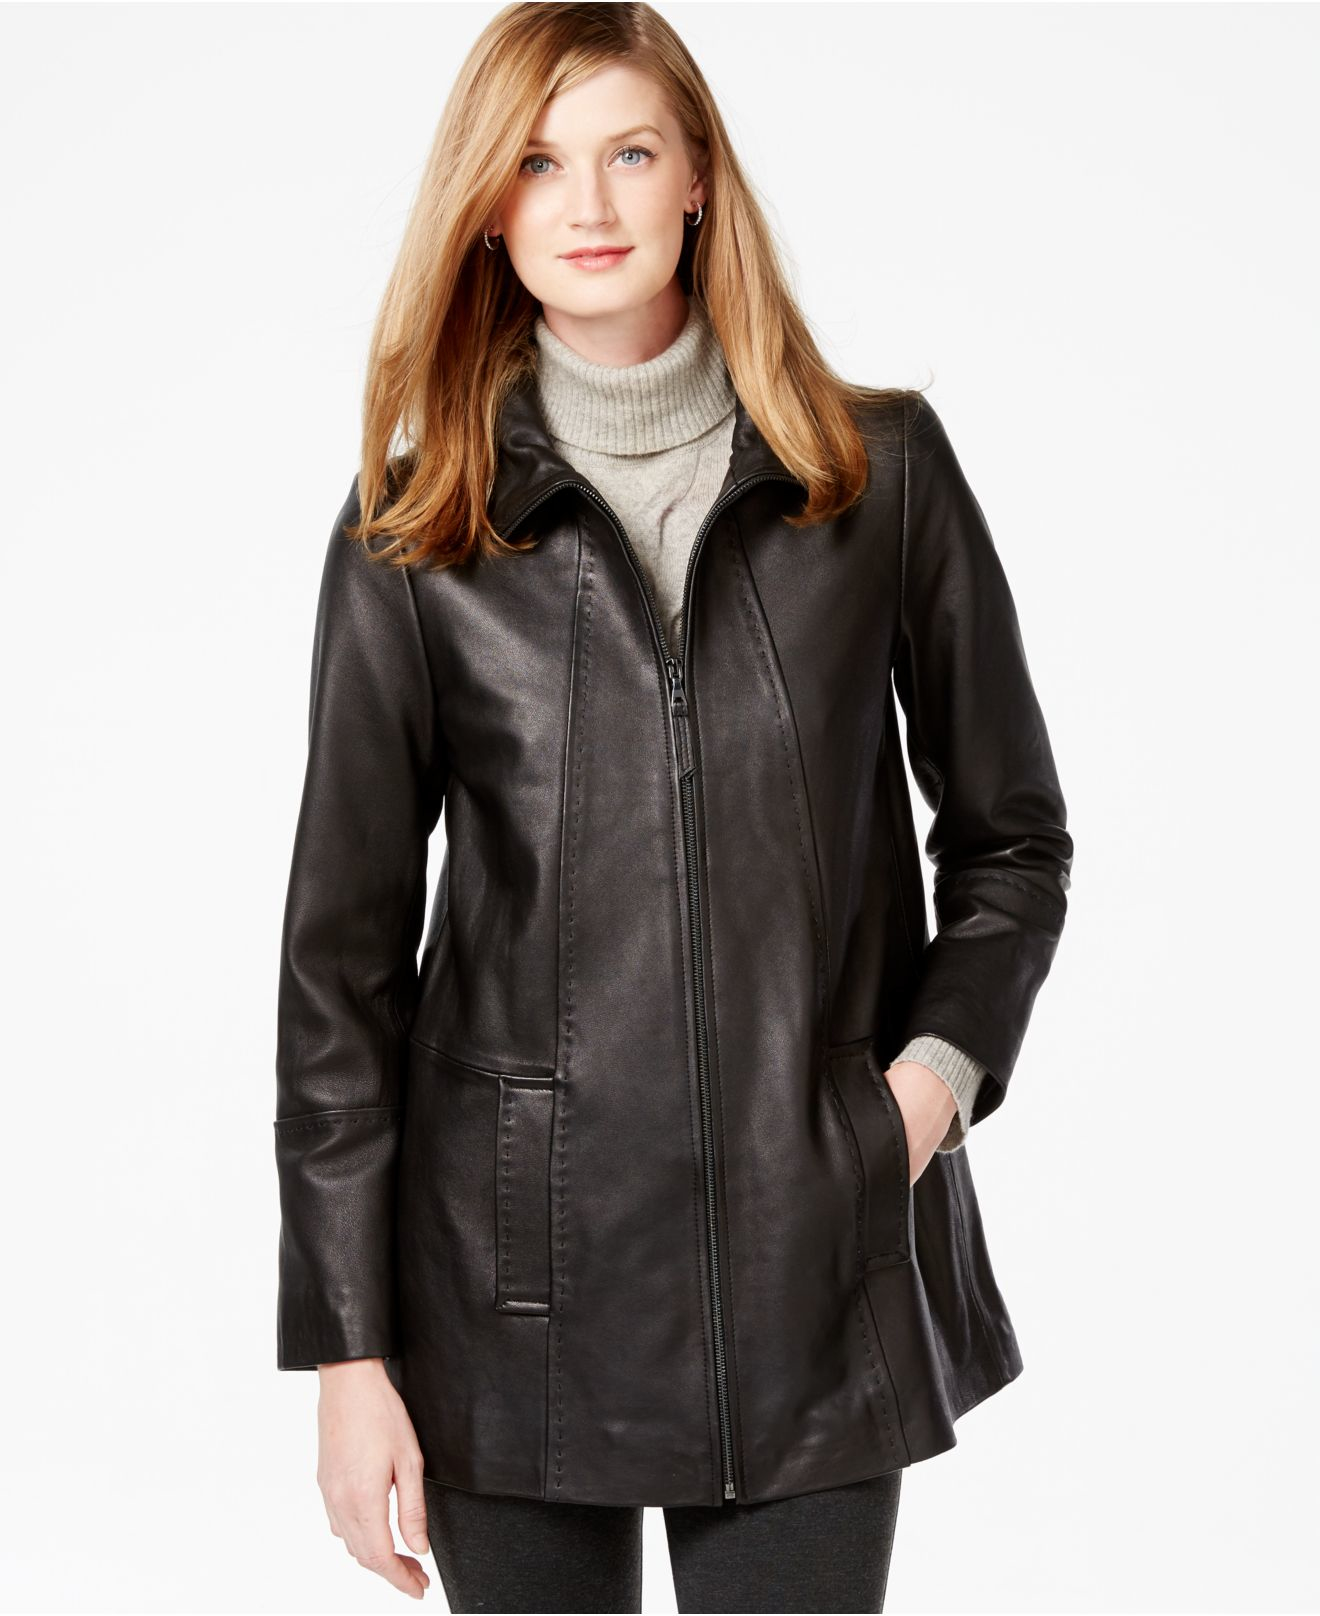 Lyst - Jones New York Topstitched Leather Coat in Black